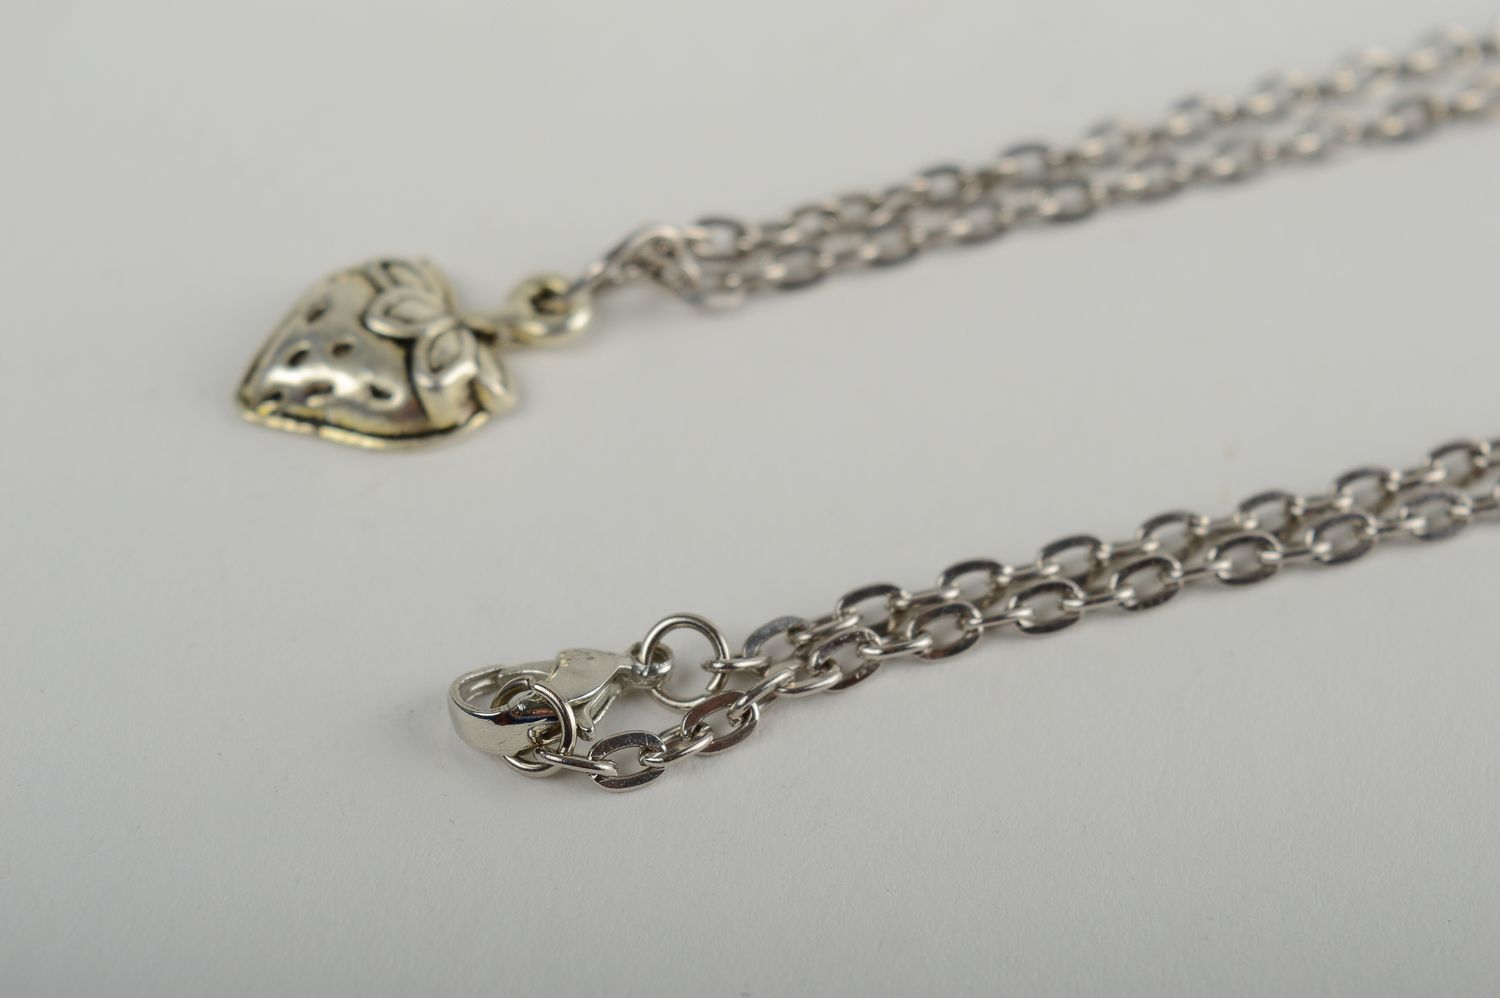 Handmade trendy pendant metal jewelry metal pendant stylish gift for women photo 3